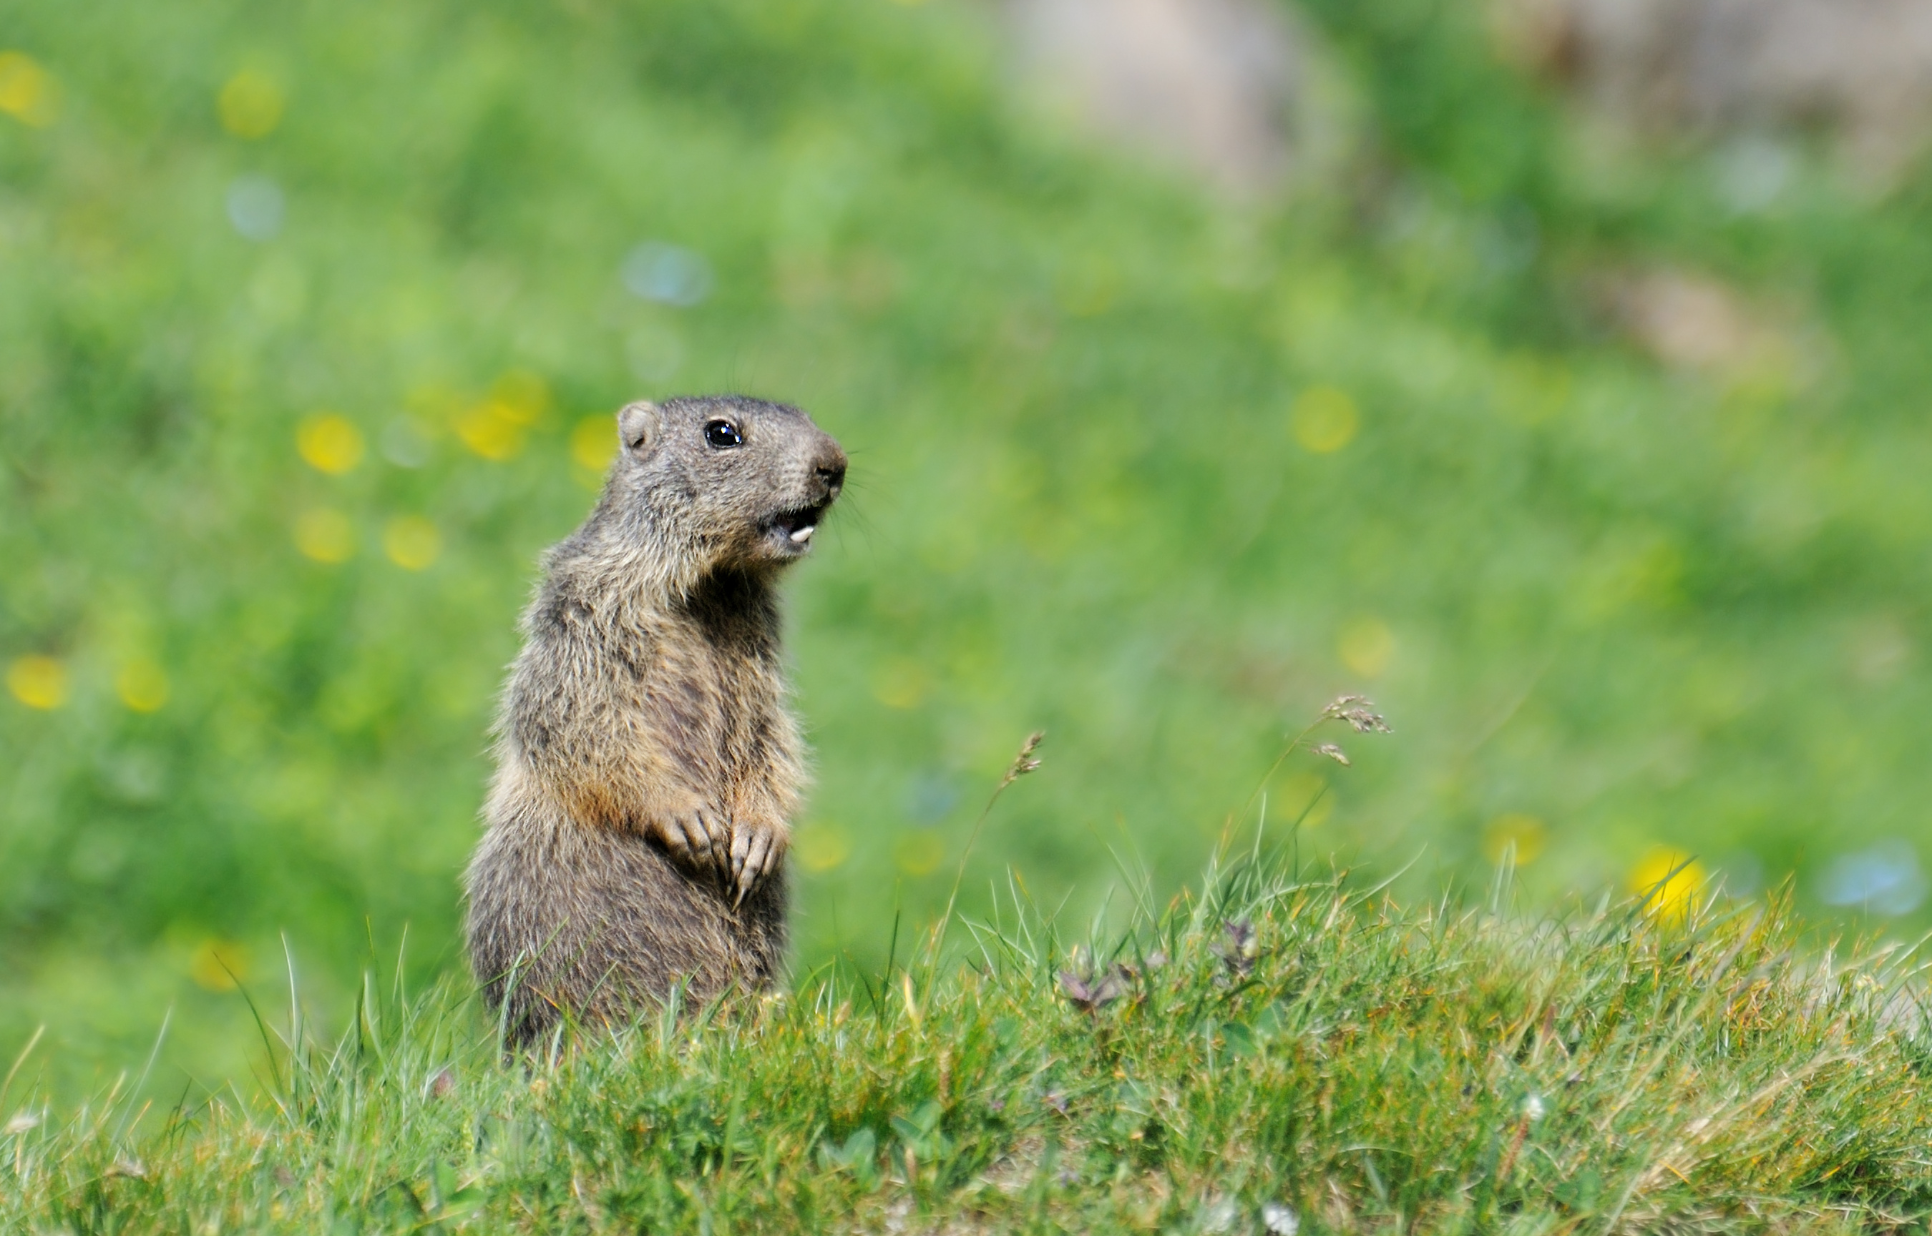 5 Fun Ways to Celebrate Groundhog's Day With Kids!